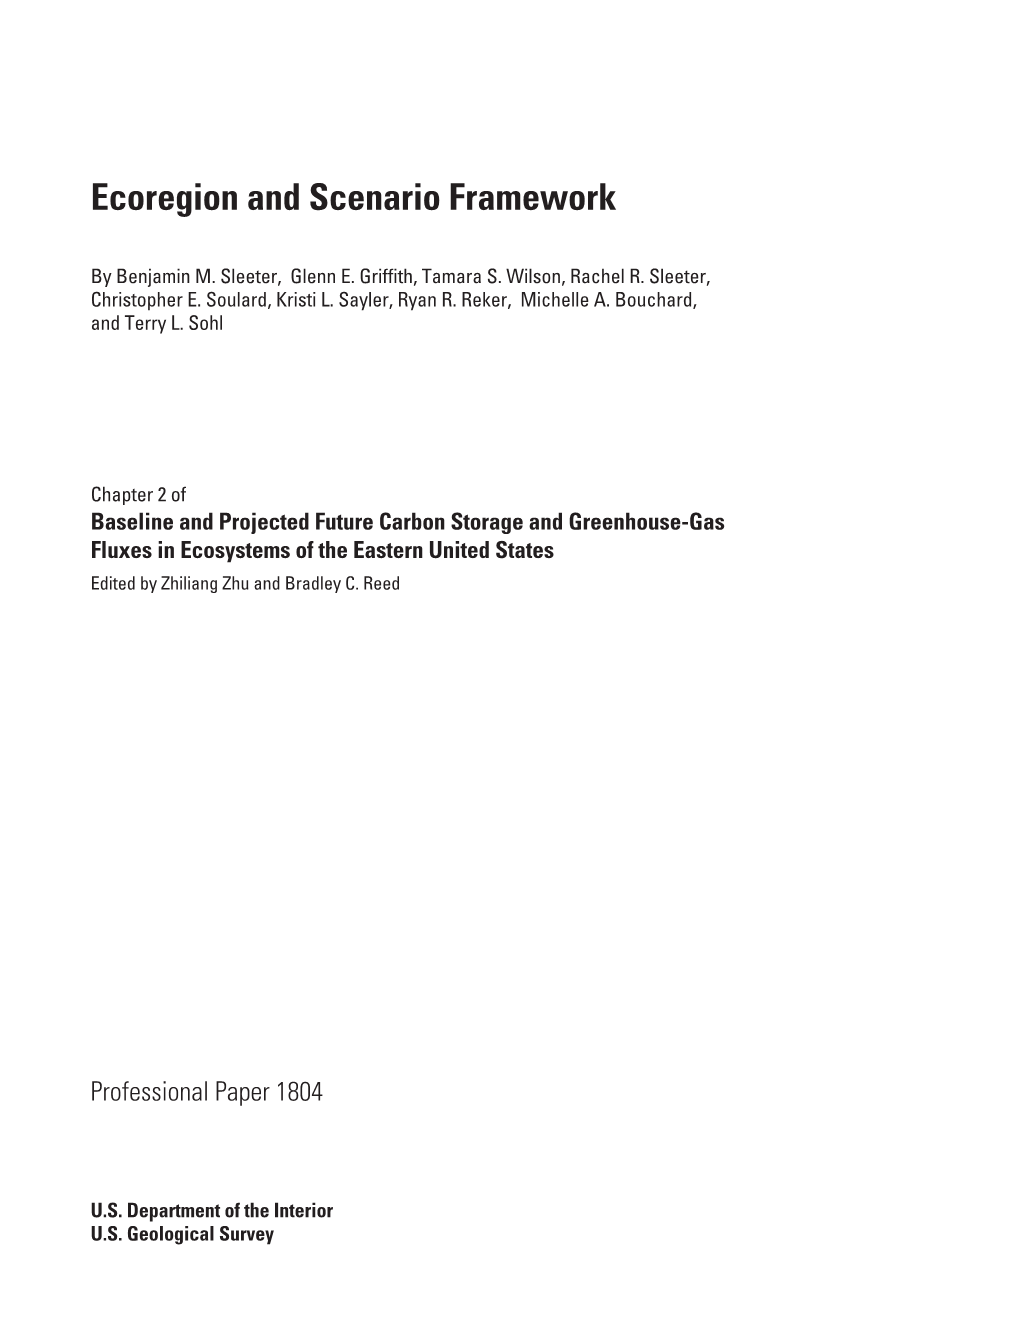 Chapter 2. Ecoregion and Scenario Framework